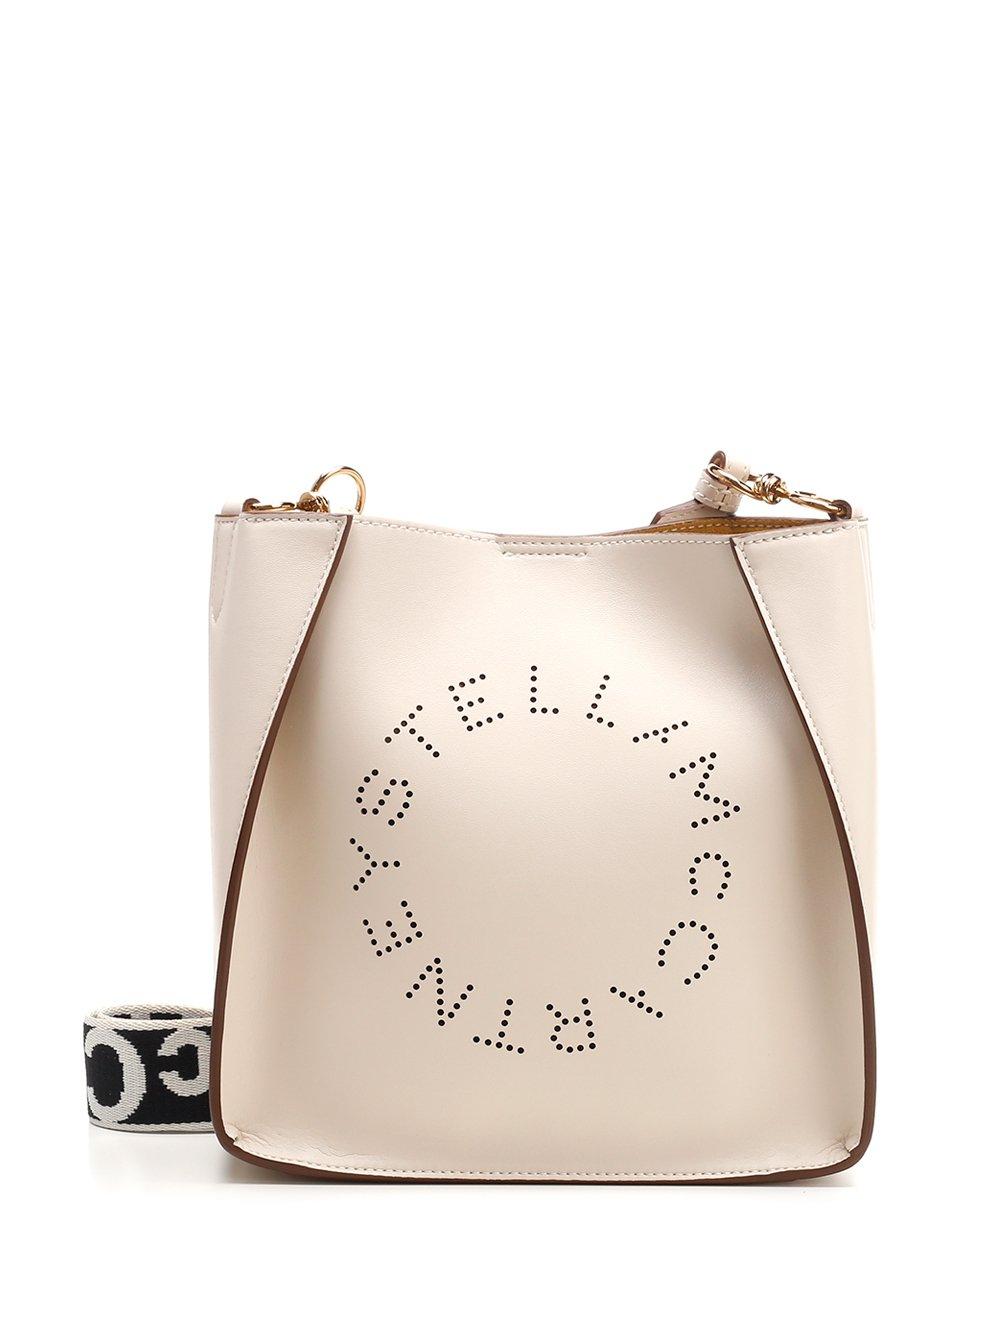 Stella McCartney Synthetic Stella Logo Shoulder Bag in White - Lyst